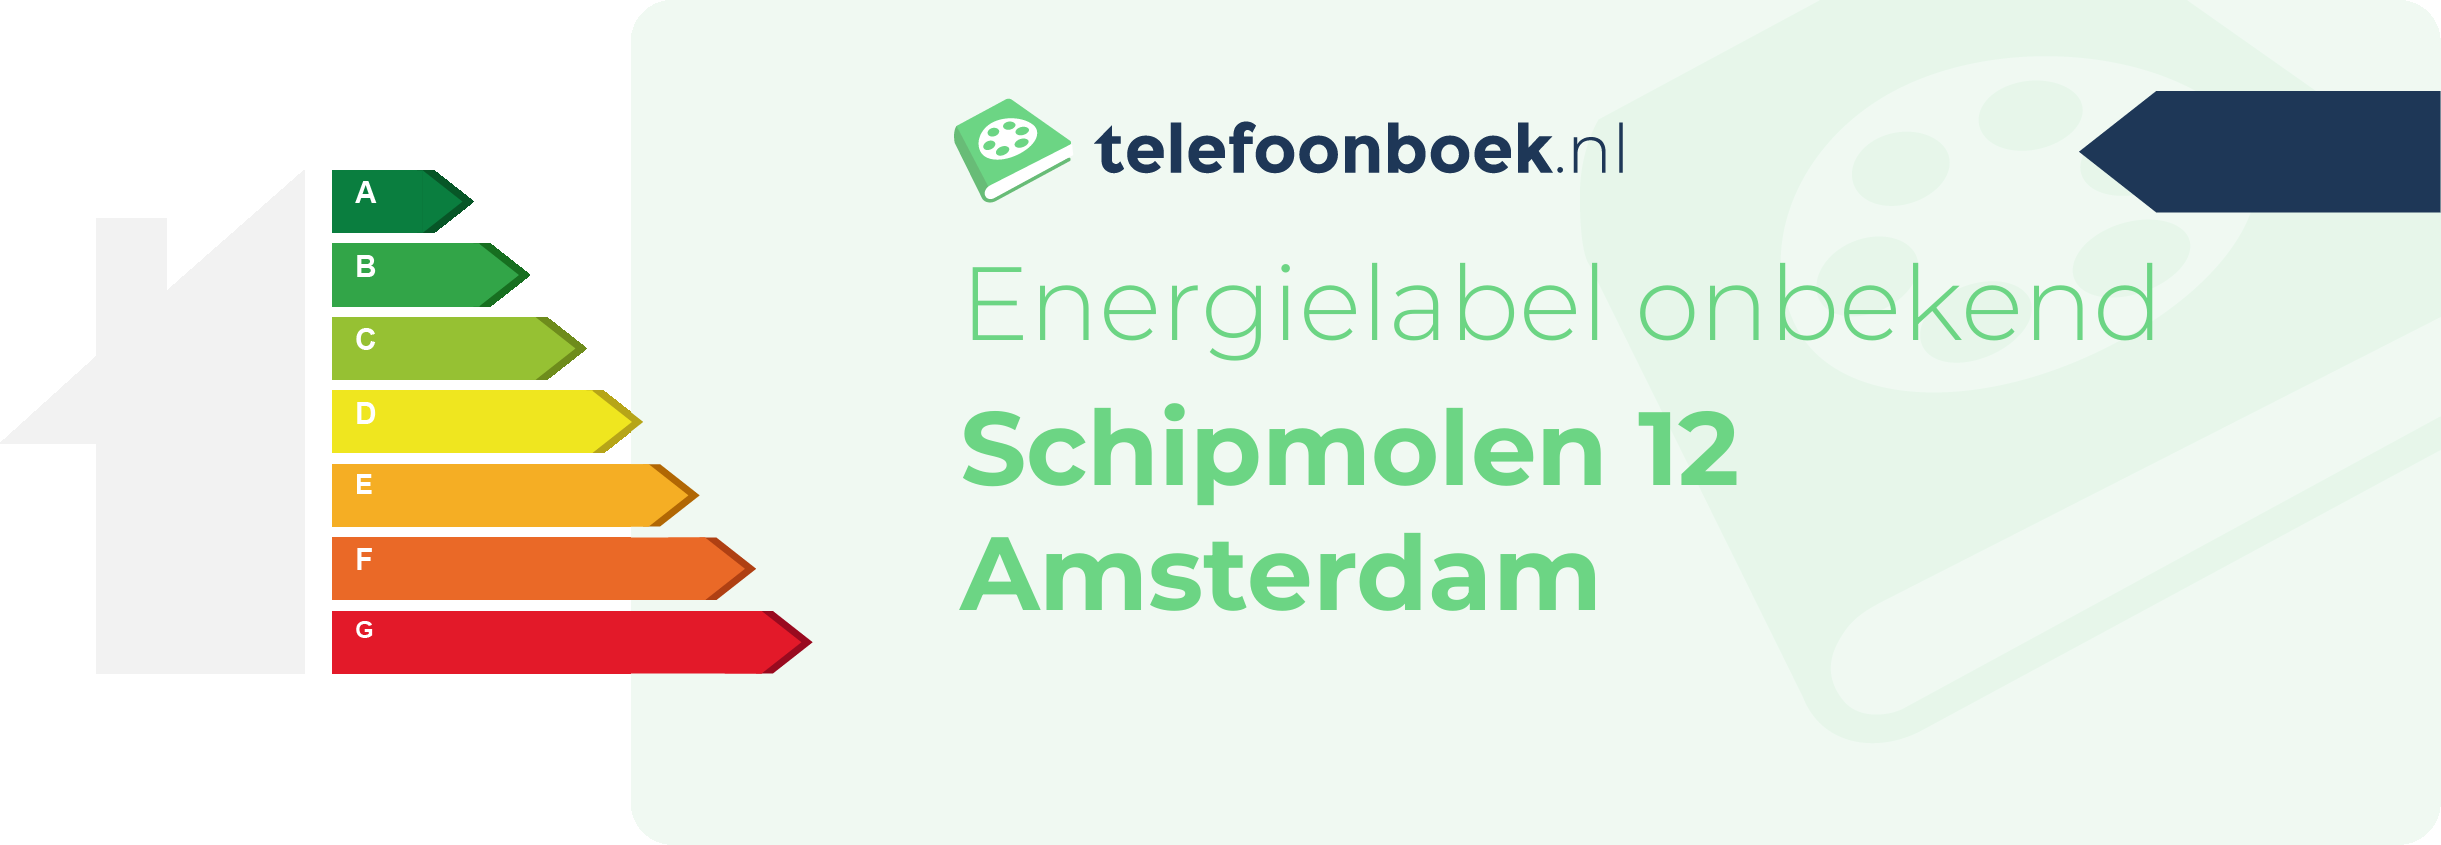 Energielabel Schipmolen 12 Amsterdam